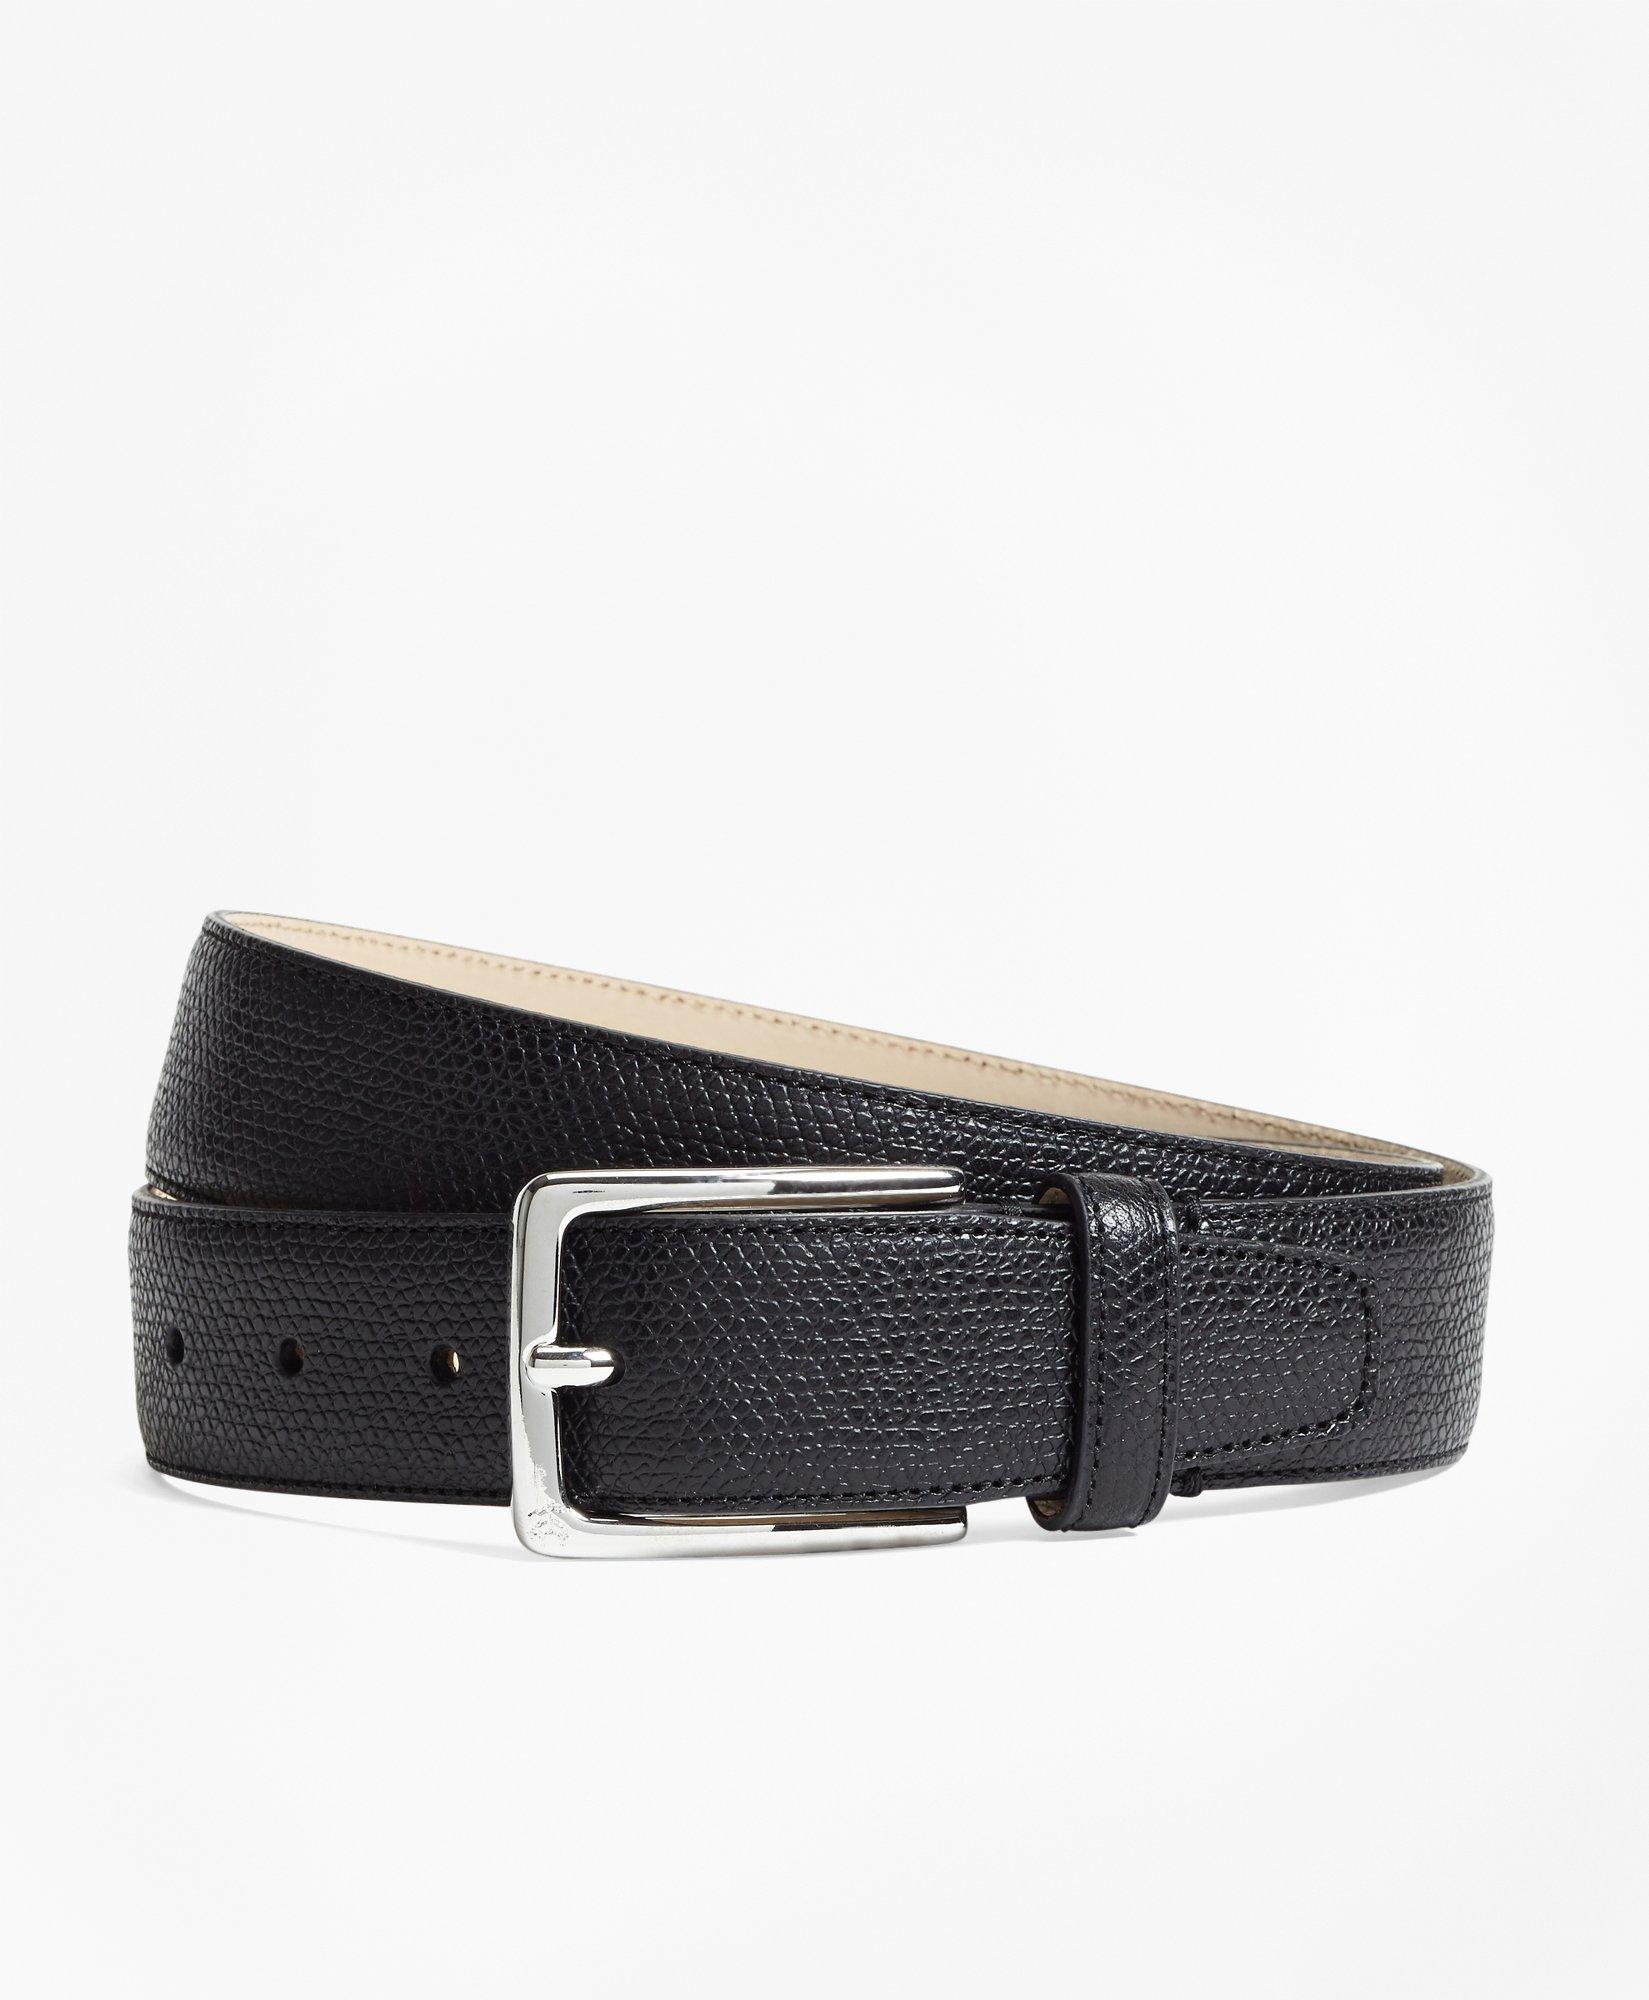 Brooks Brothers 1818 Textured Leather Belt | Black | Size 36